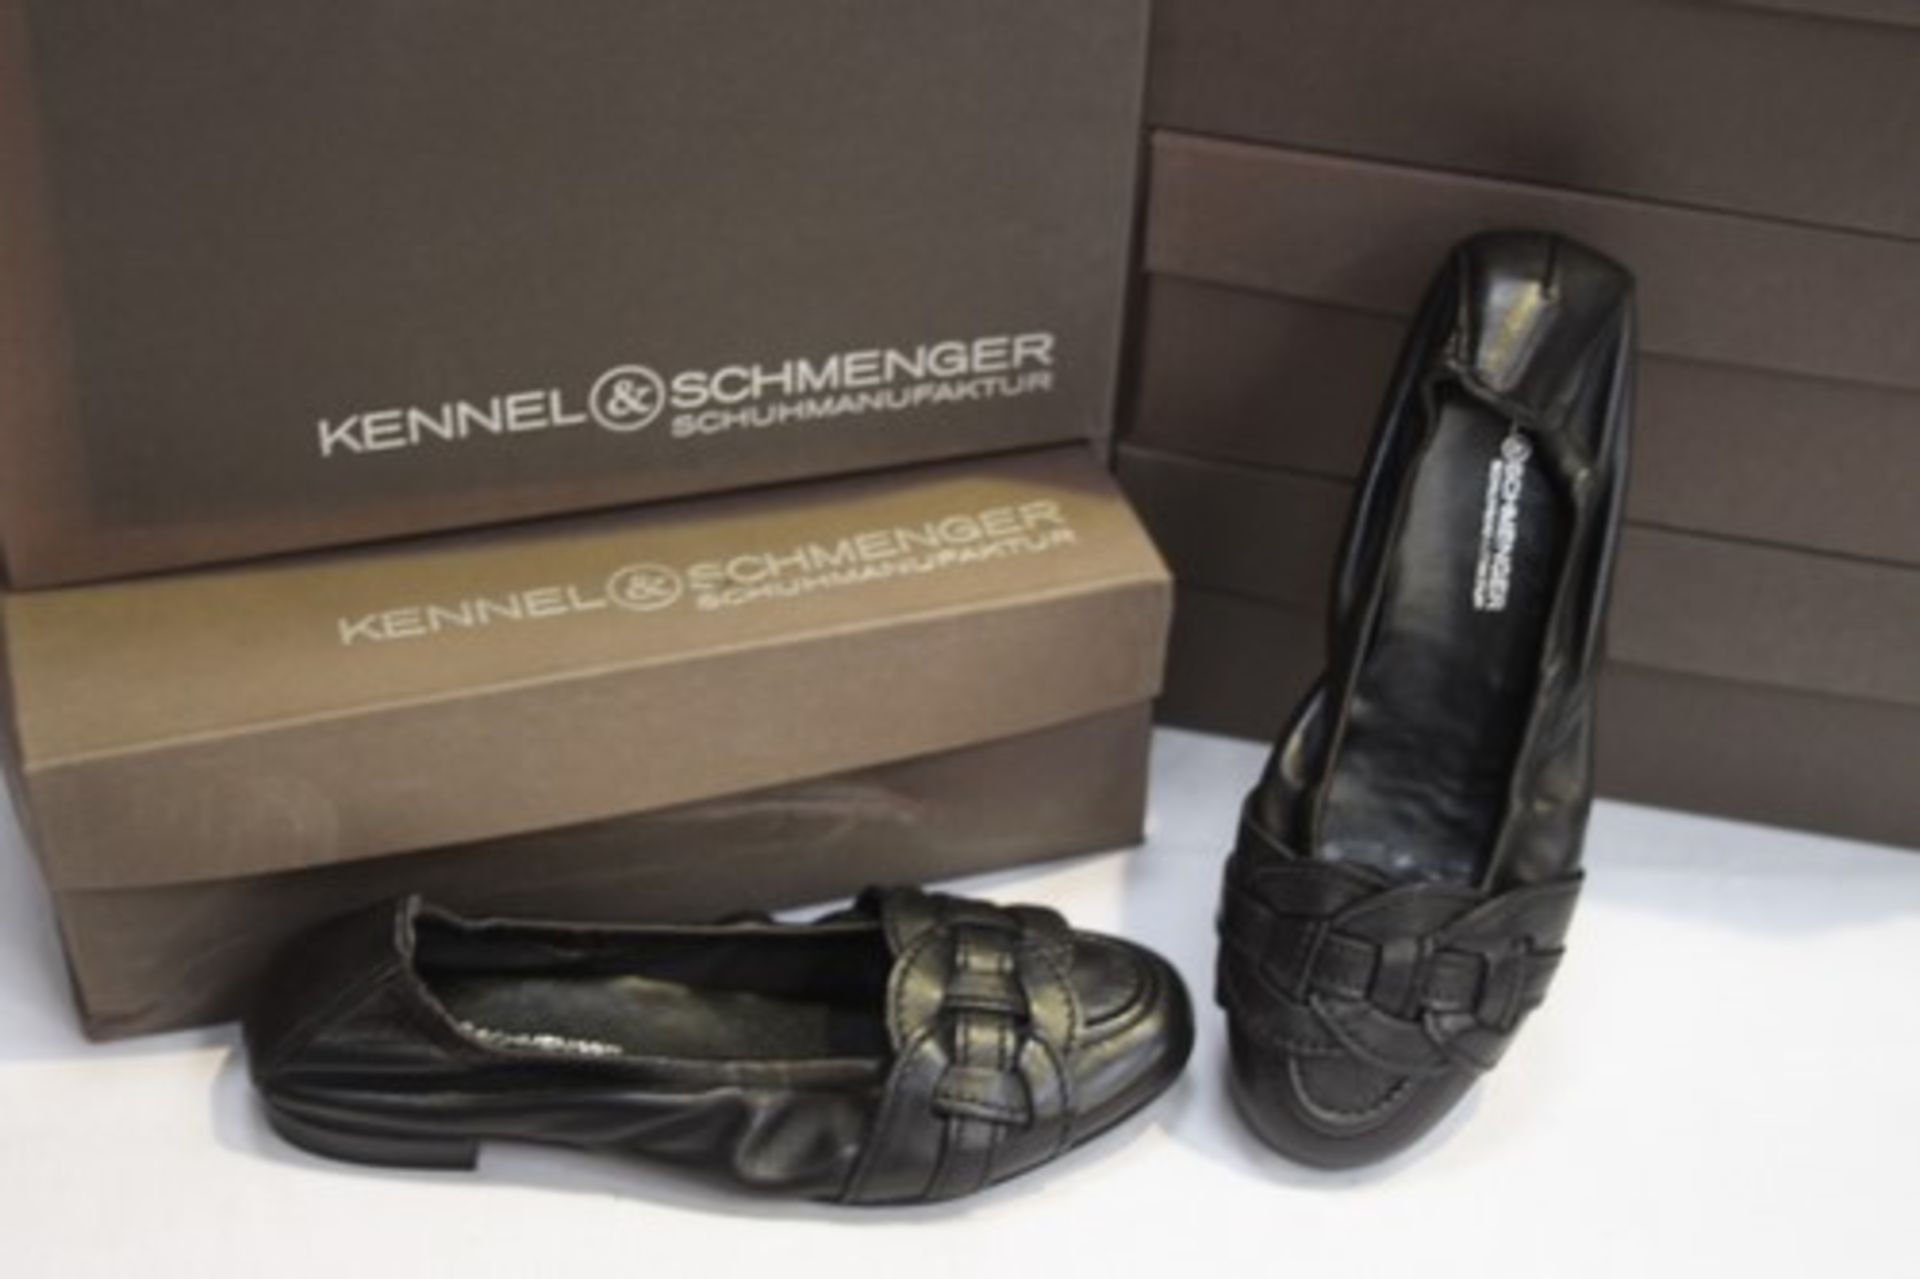 5 x pairs of Kennel & Schmenger ladies nappa schwarz shoes, 1 x size UK 5, 1 x size UK 6.5, 1 x size